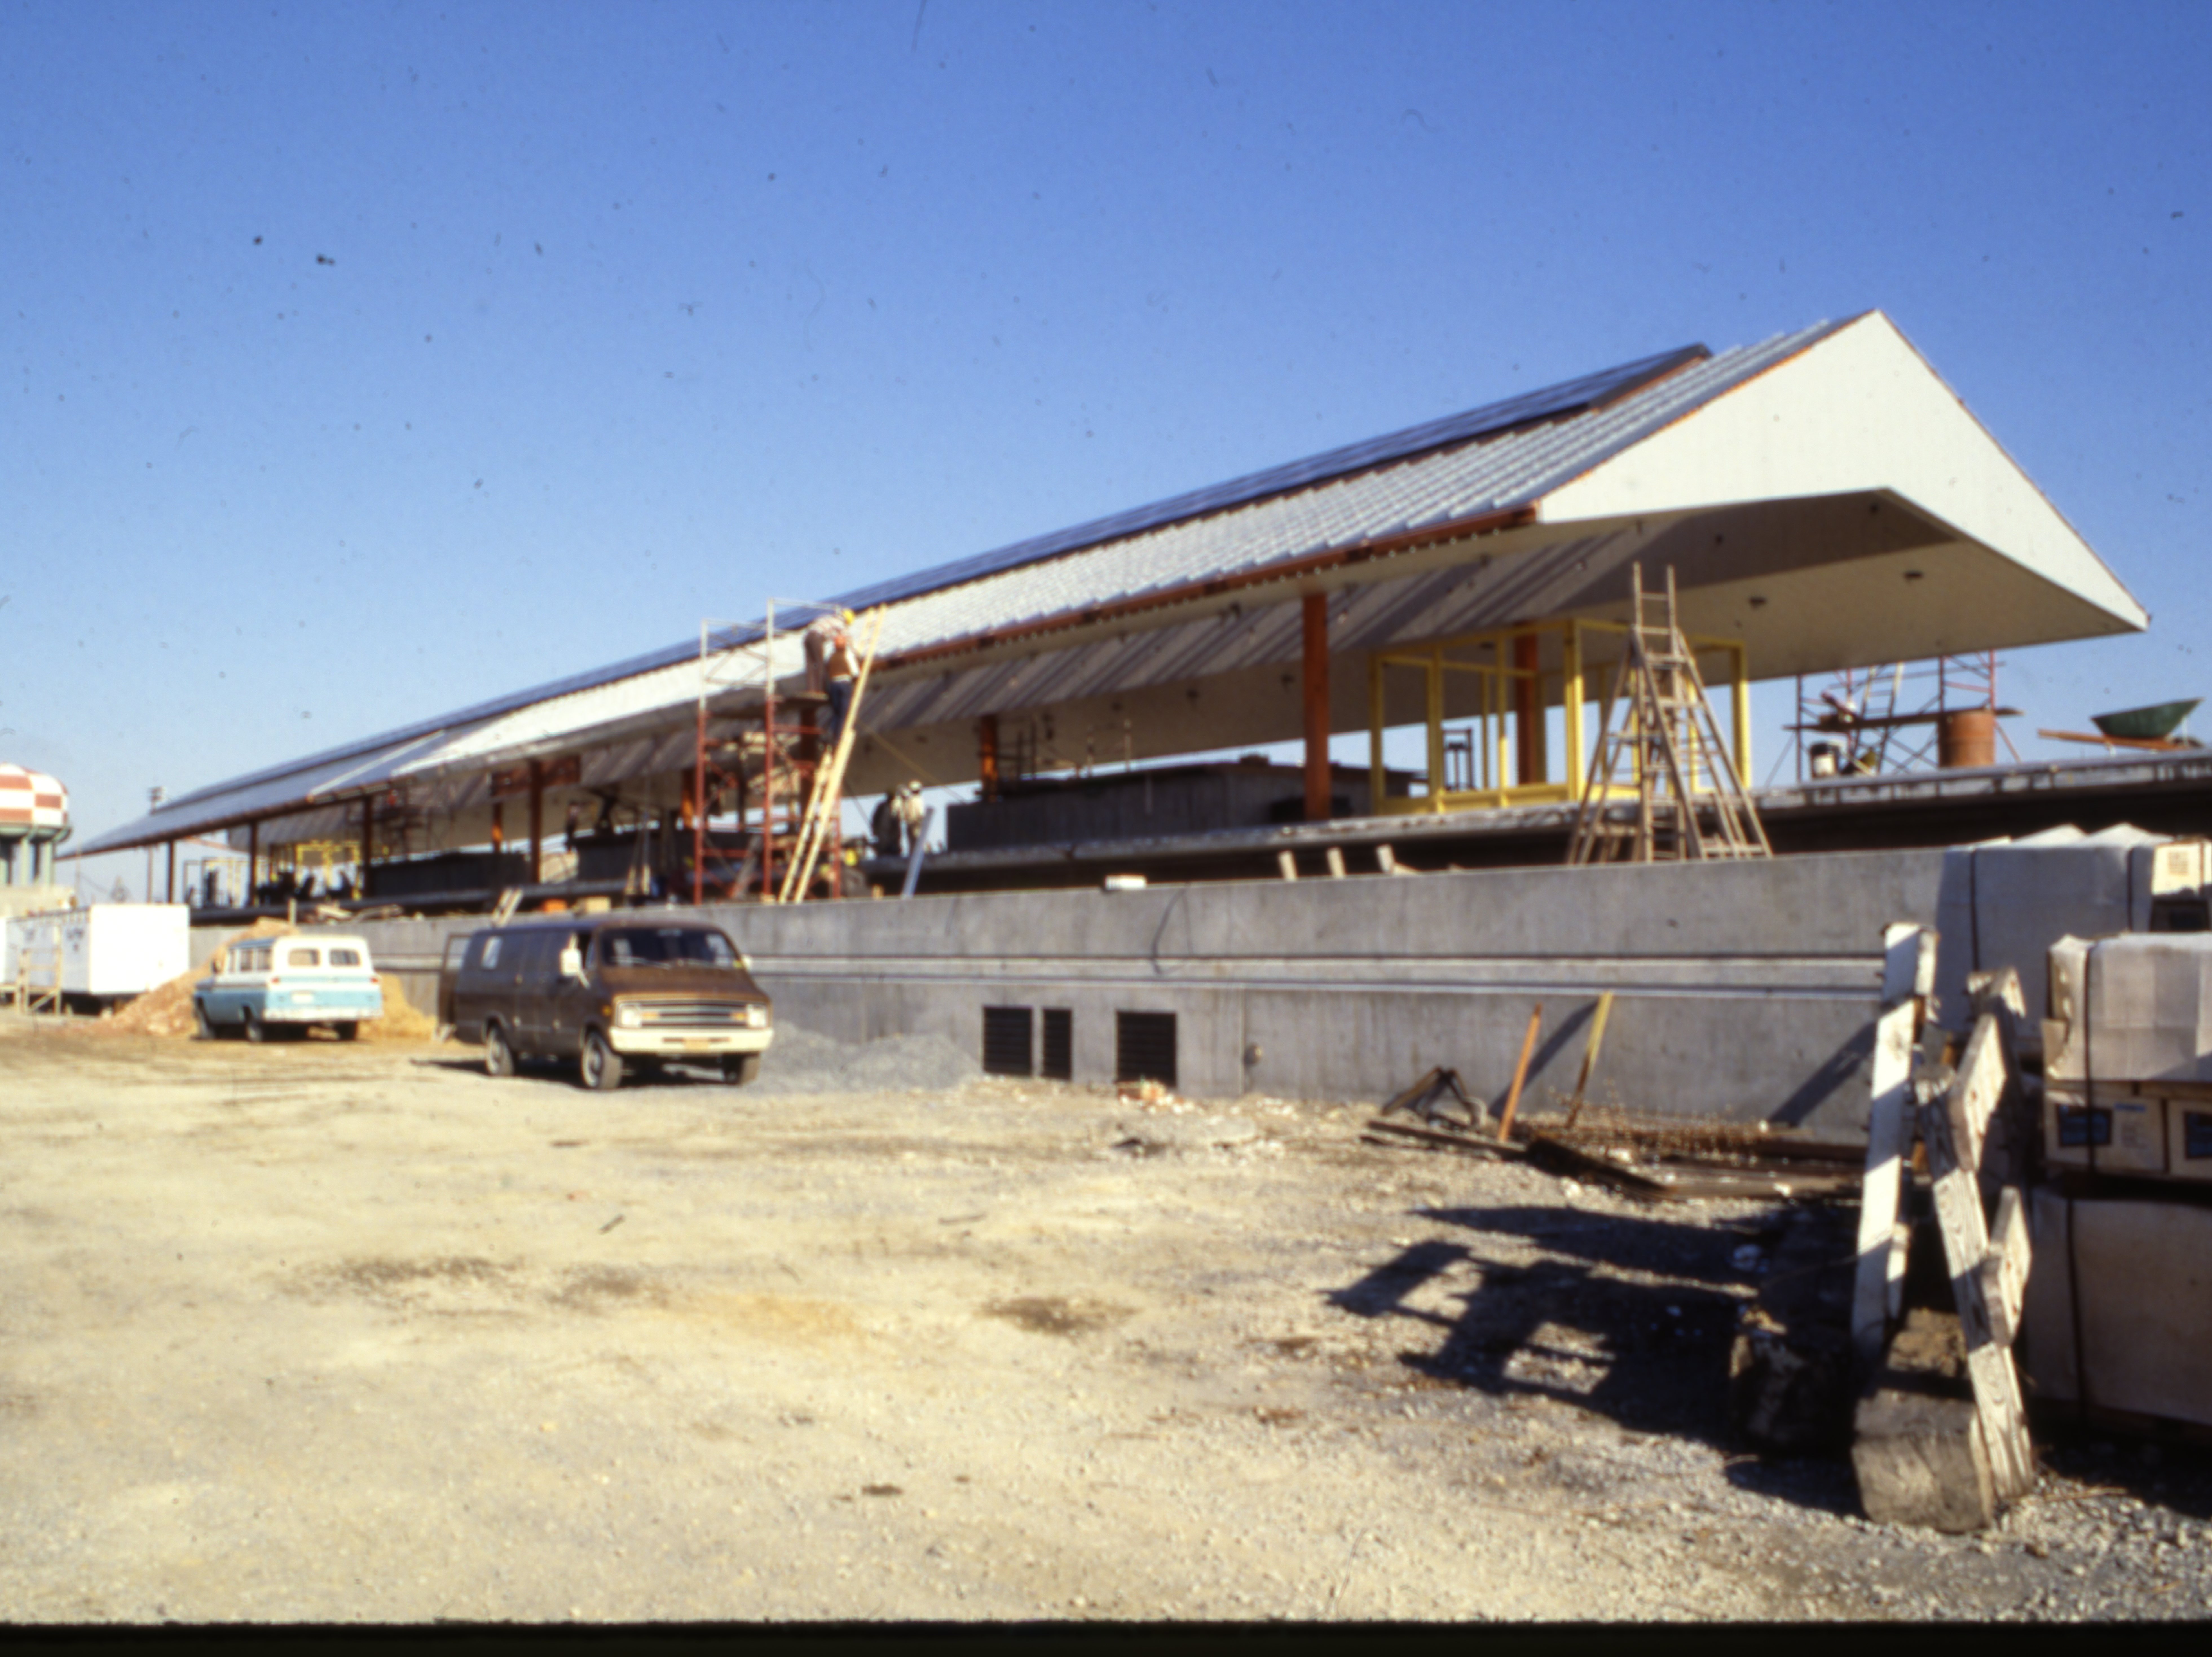 Braddock Rd Station - November 1979